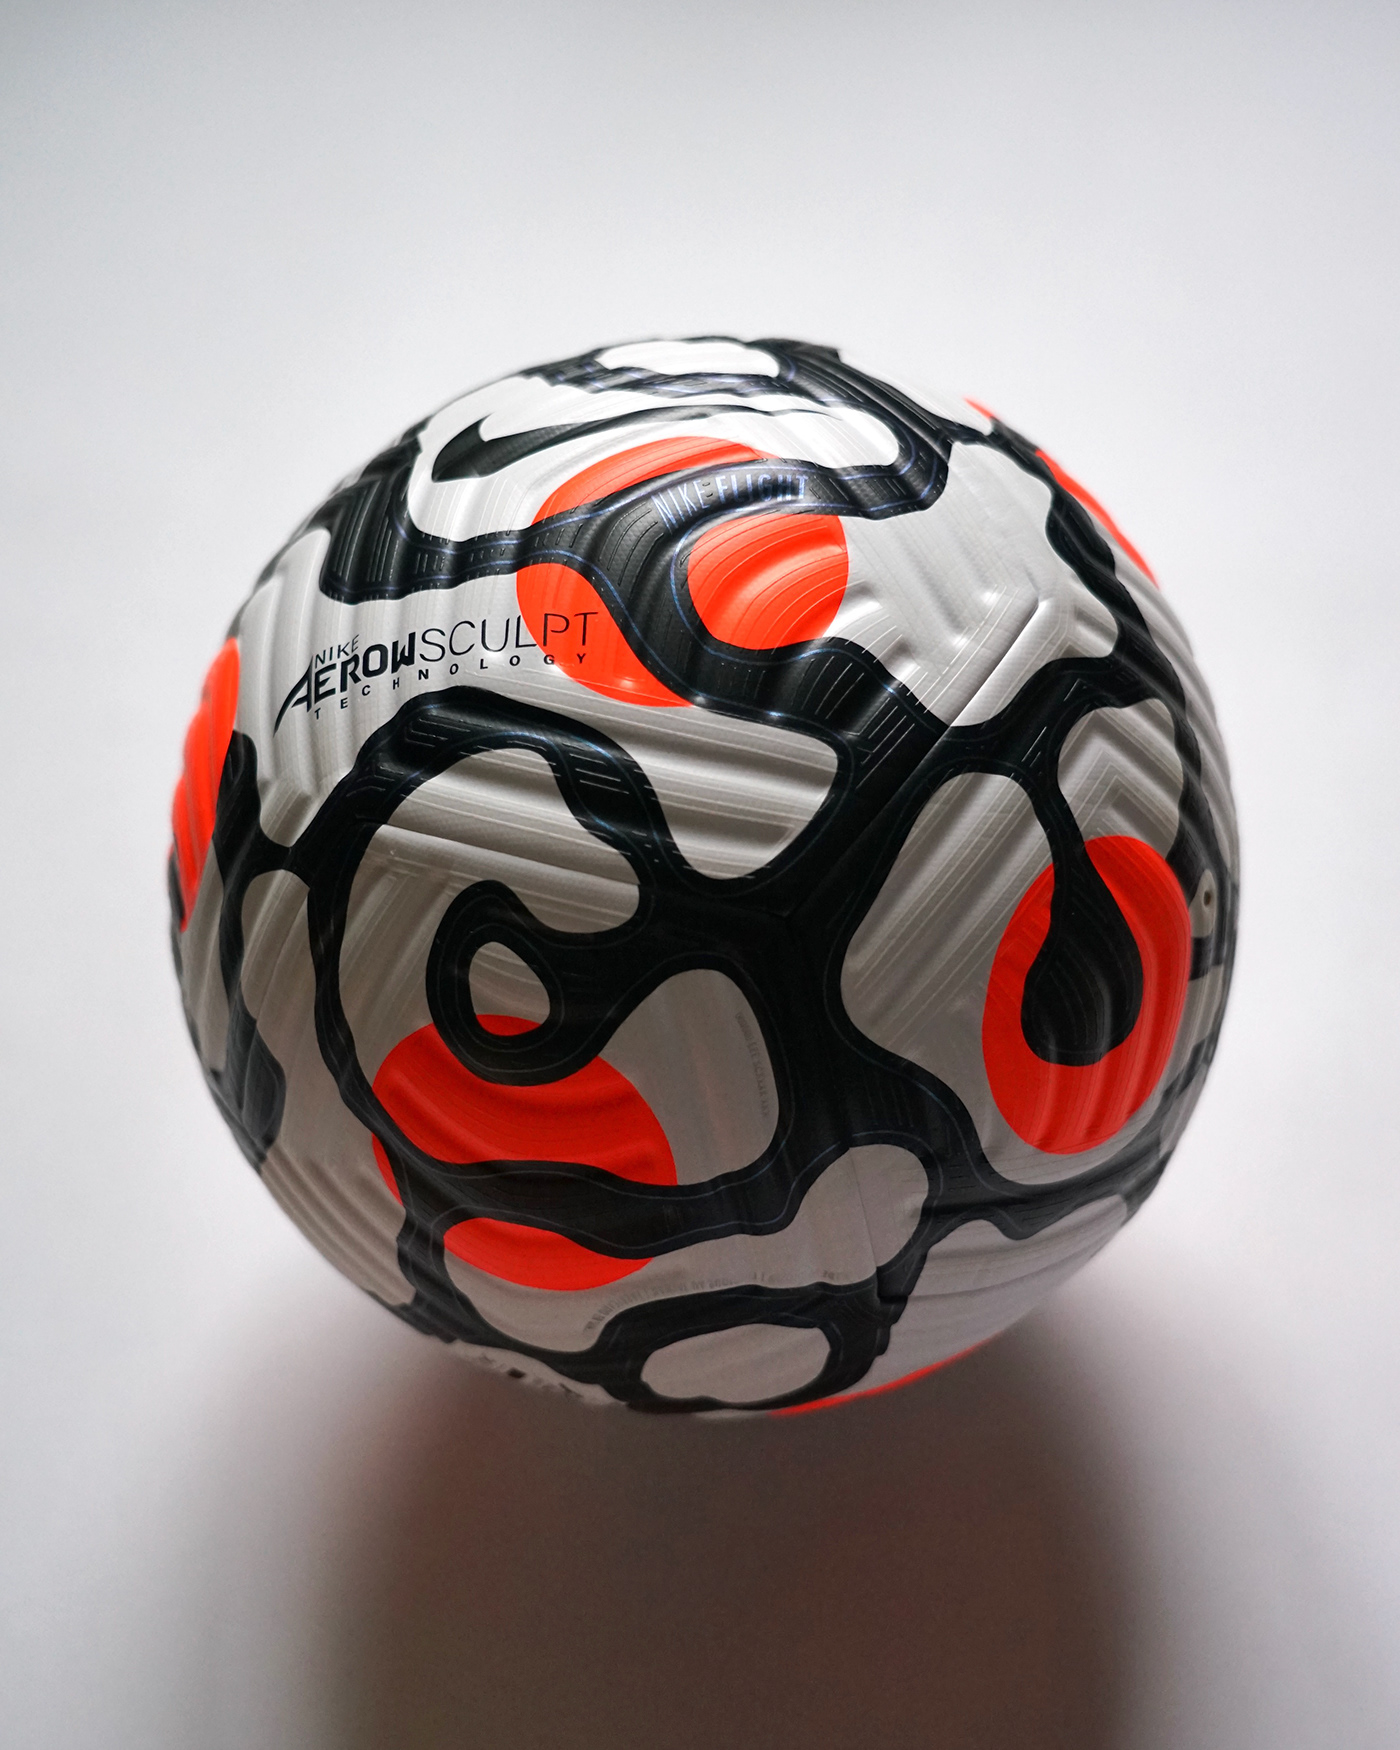 ball equipment football graphic Nike Premier League soccer